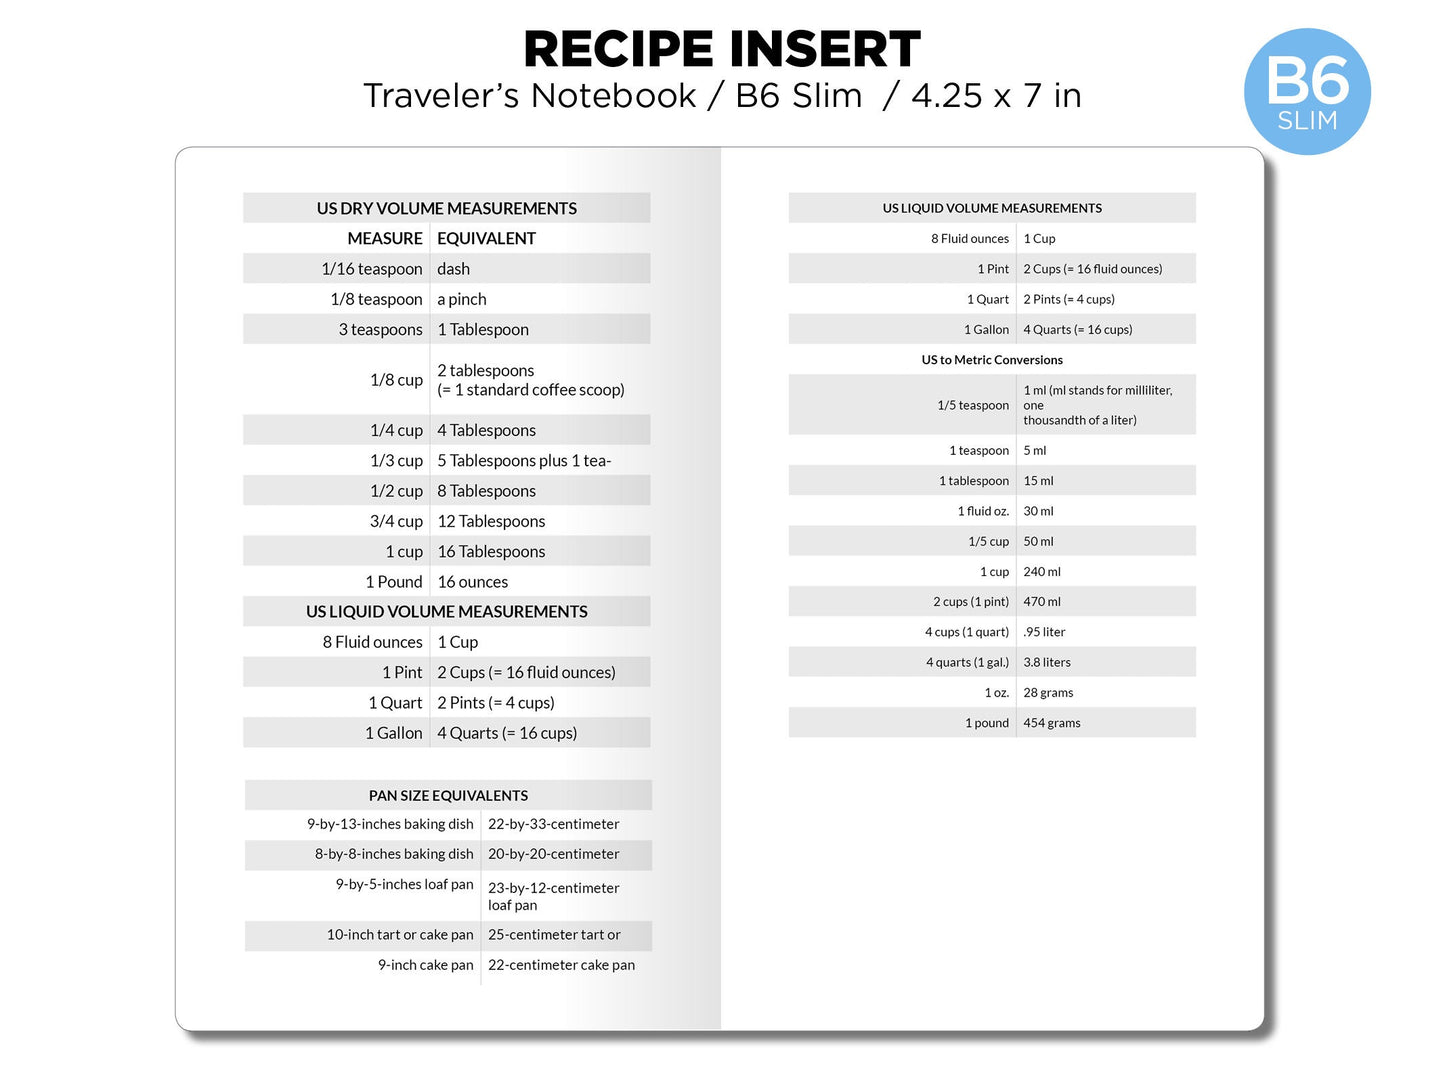 TN B6 Slim Recipe Insert Planner Printable Traveler's Notebook Insert